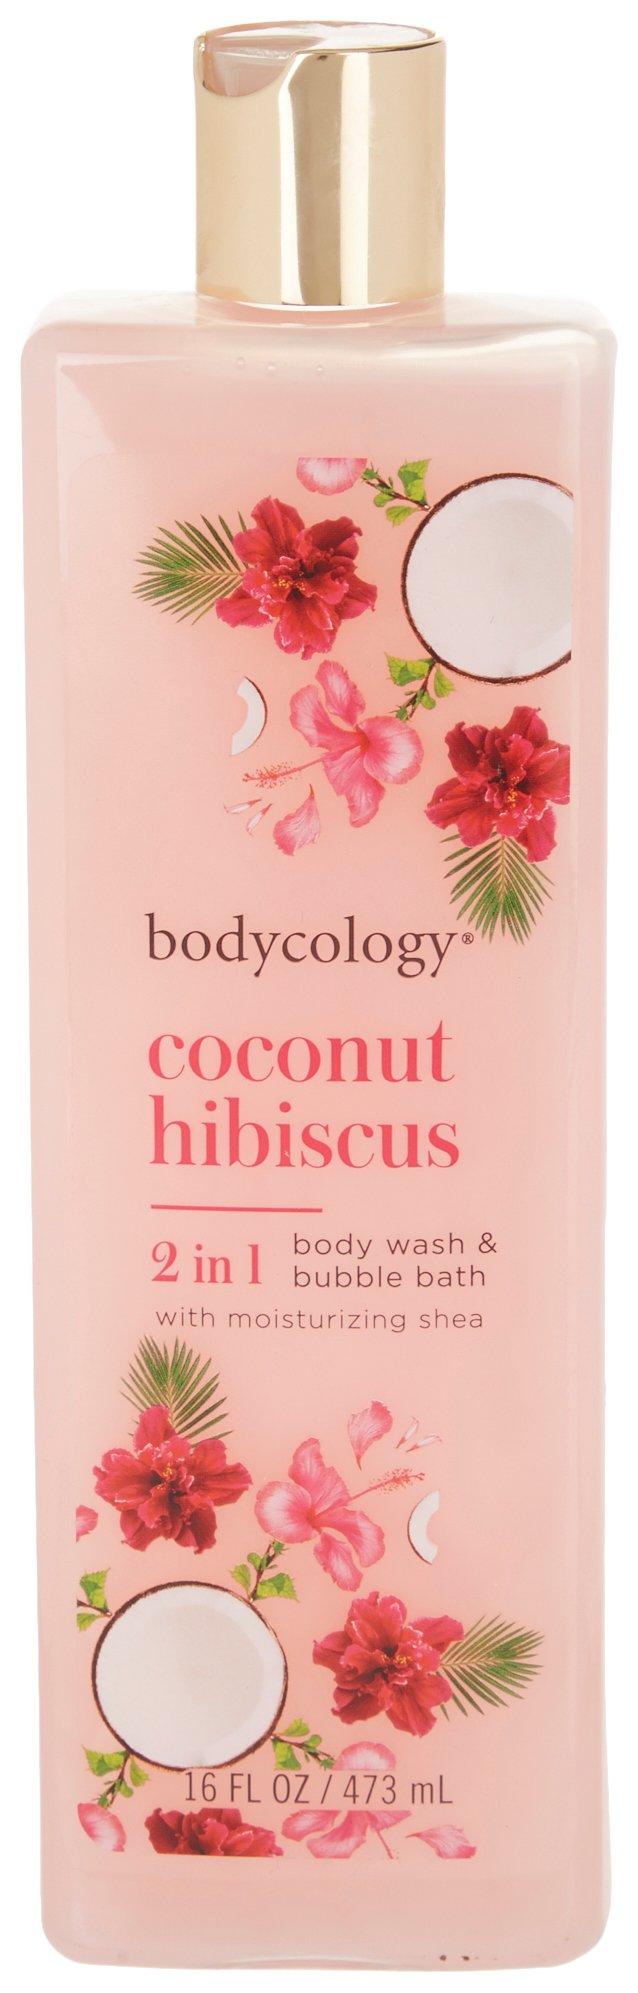 Coconut Hibiscus Body Wash & Bubble Bath 16 oz.